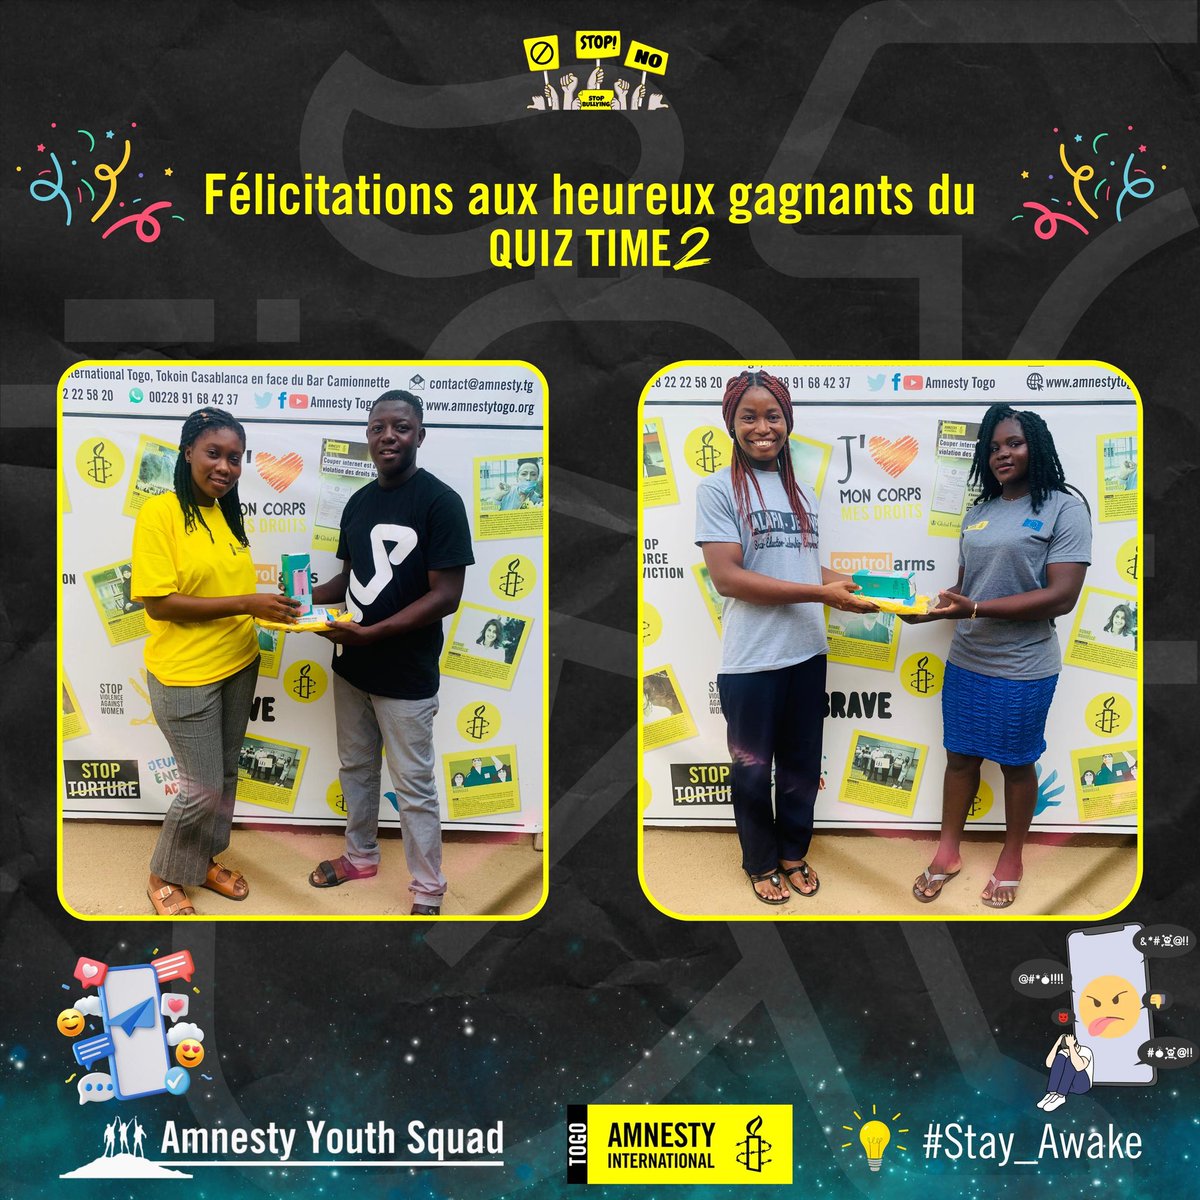 ✨Hello cher communauté super sympa ☺️✨

Félicitations aux heureux gagnants du deuxième quizz.
#StayAwake🔥 #StopHarcèlement #AmnestyYouthSquad 
#Standup4HumanRights 
#DroitsHumains #Youths
#AmnestyInternational #Amnesty #Togo #Africa
@AmnestyTogo